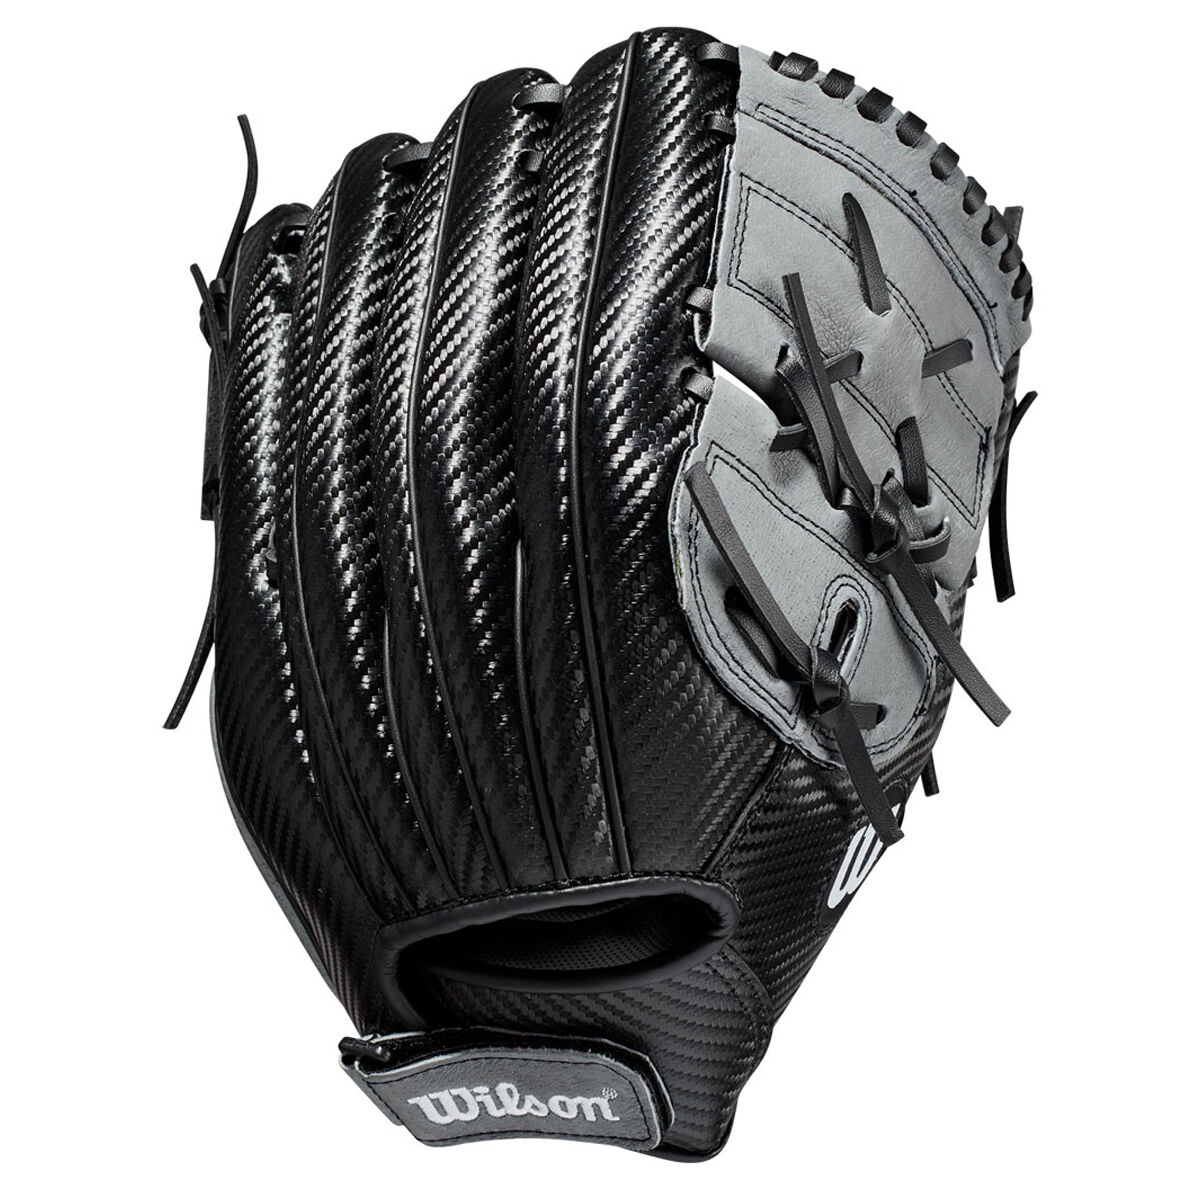 Wilson A360 Baseball Glove Series 